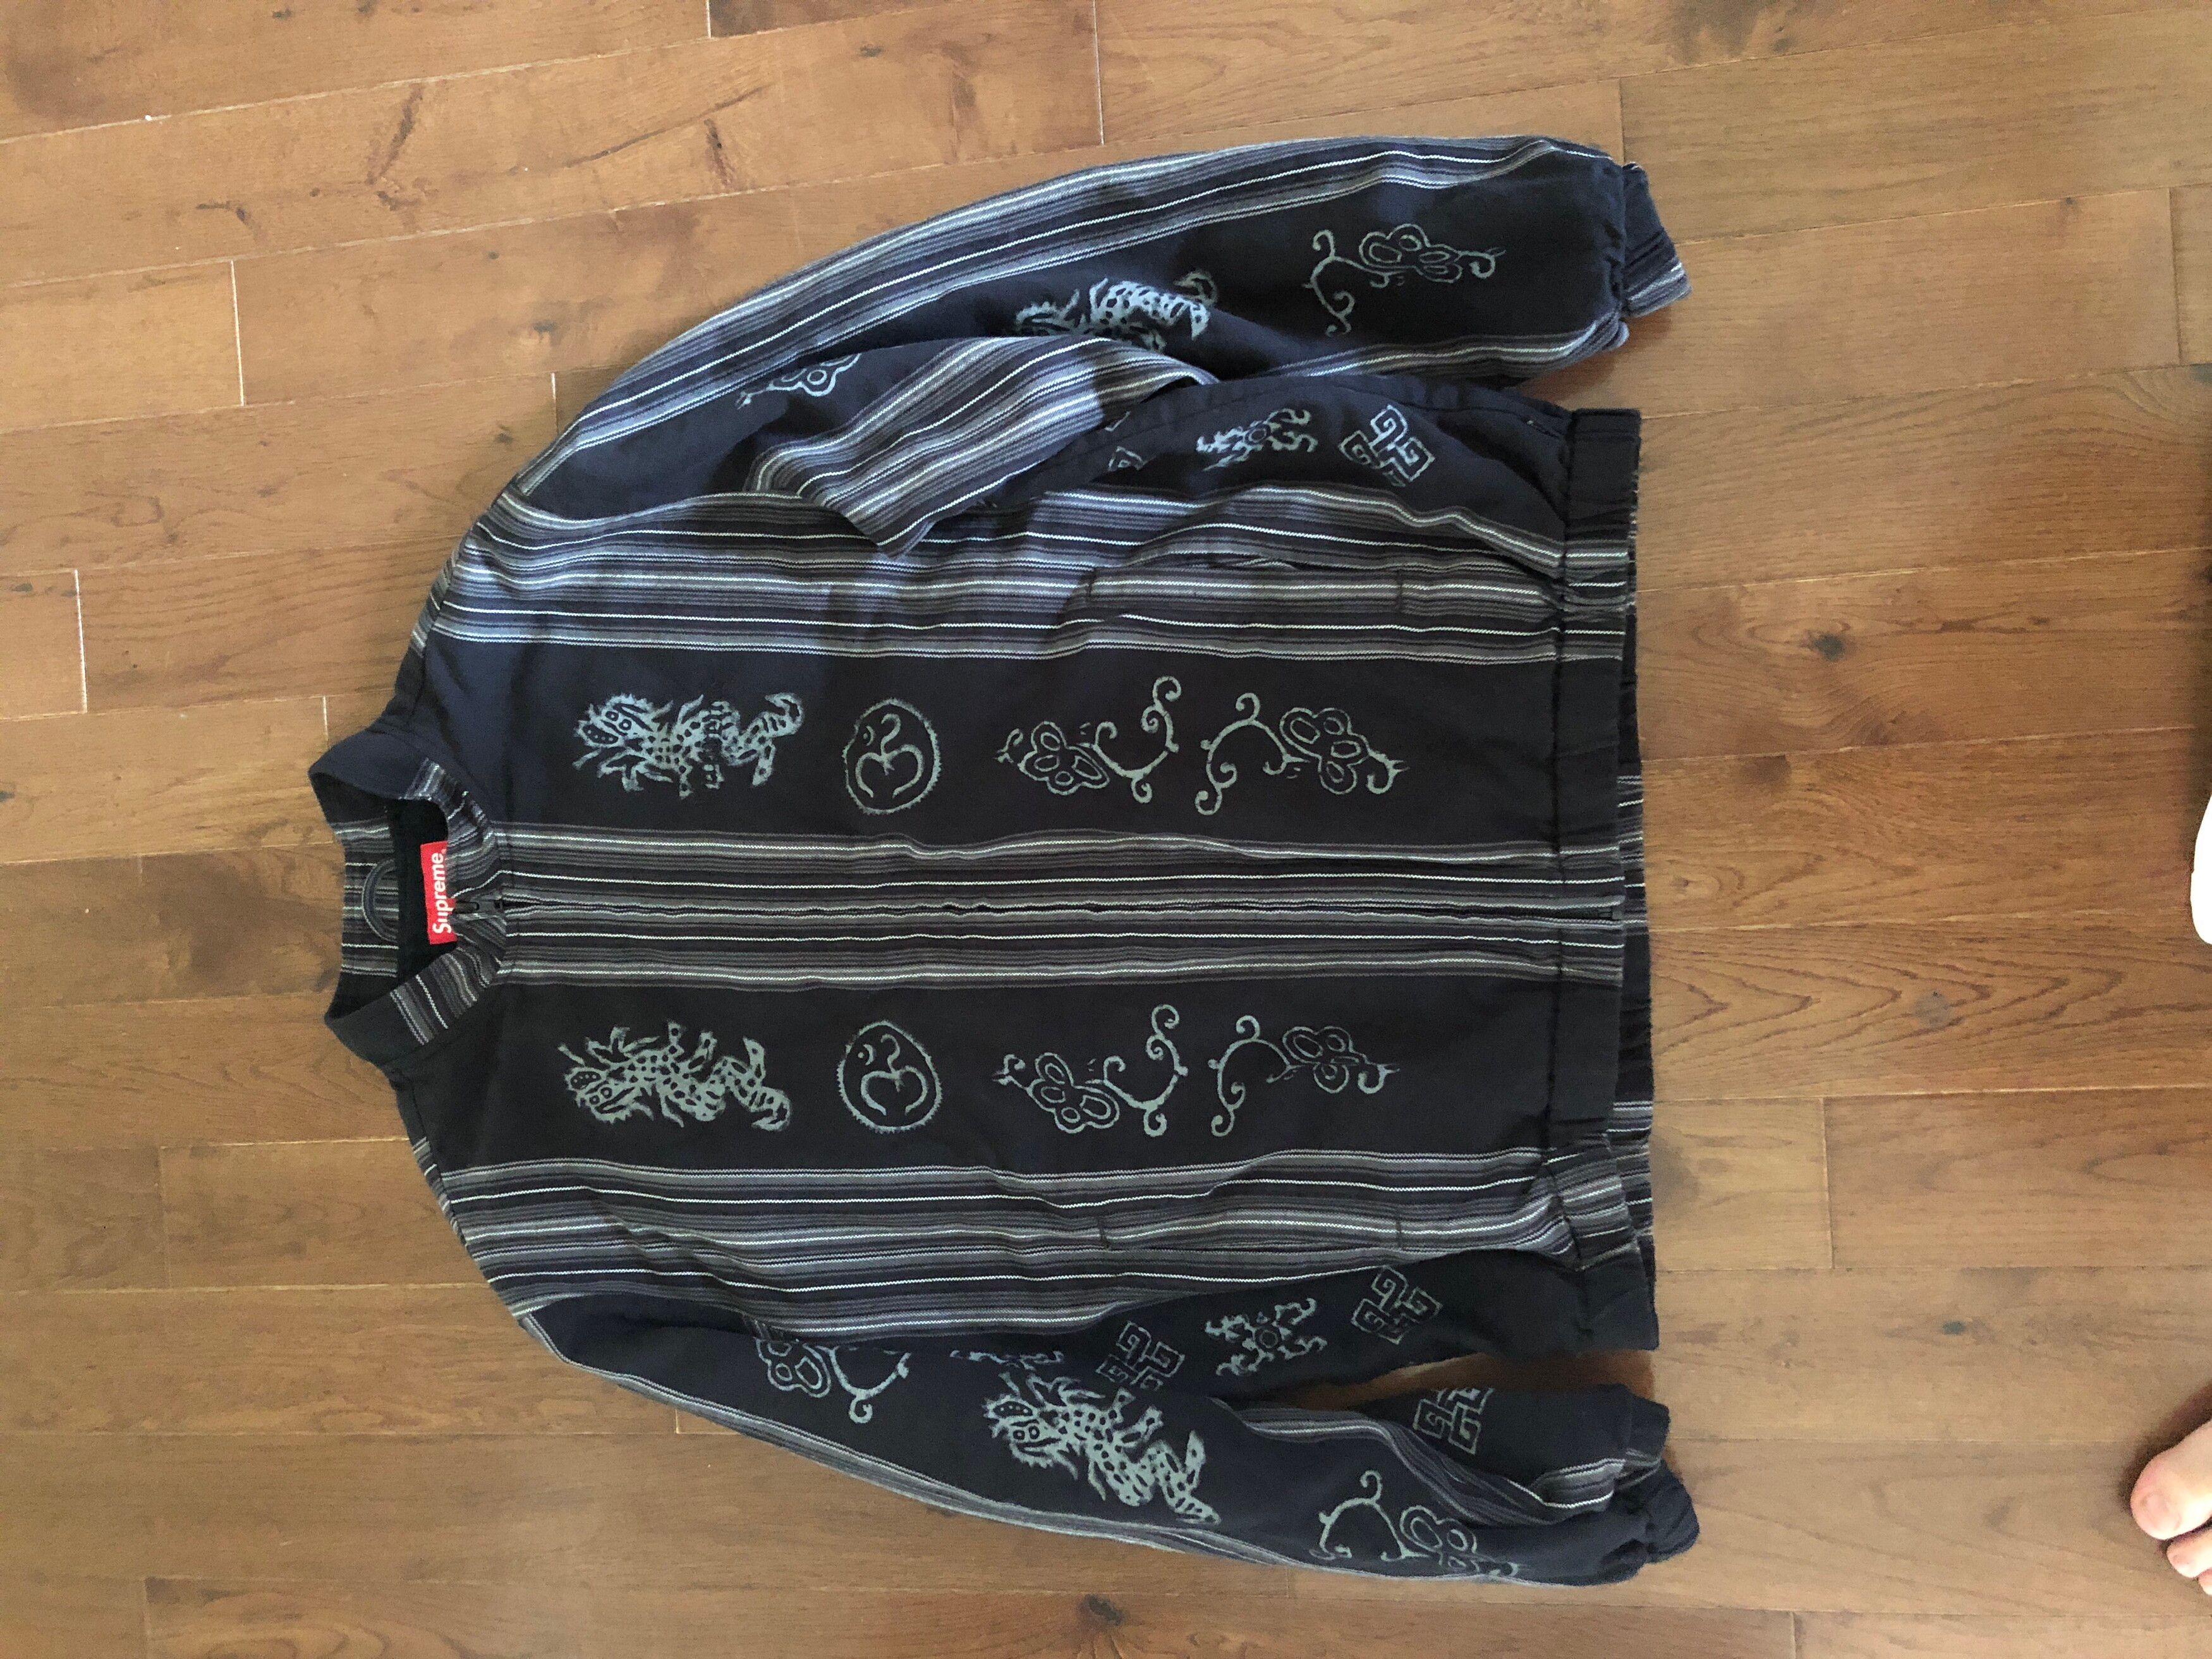 Supreme Supreme woven striped Batik Jacket in Medium | Grailed